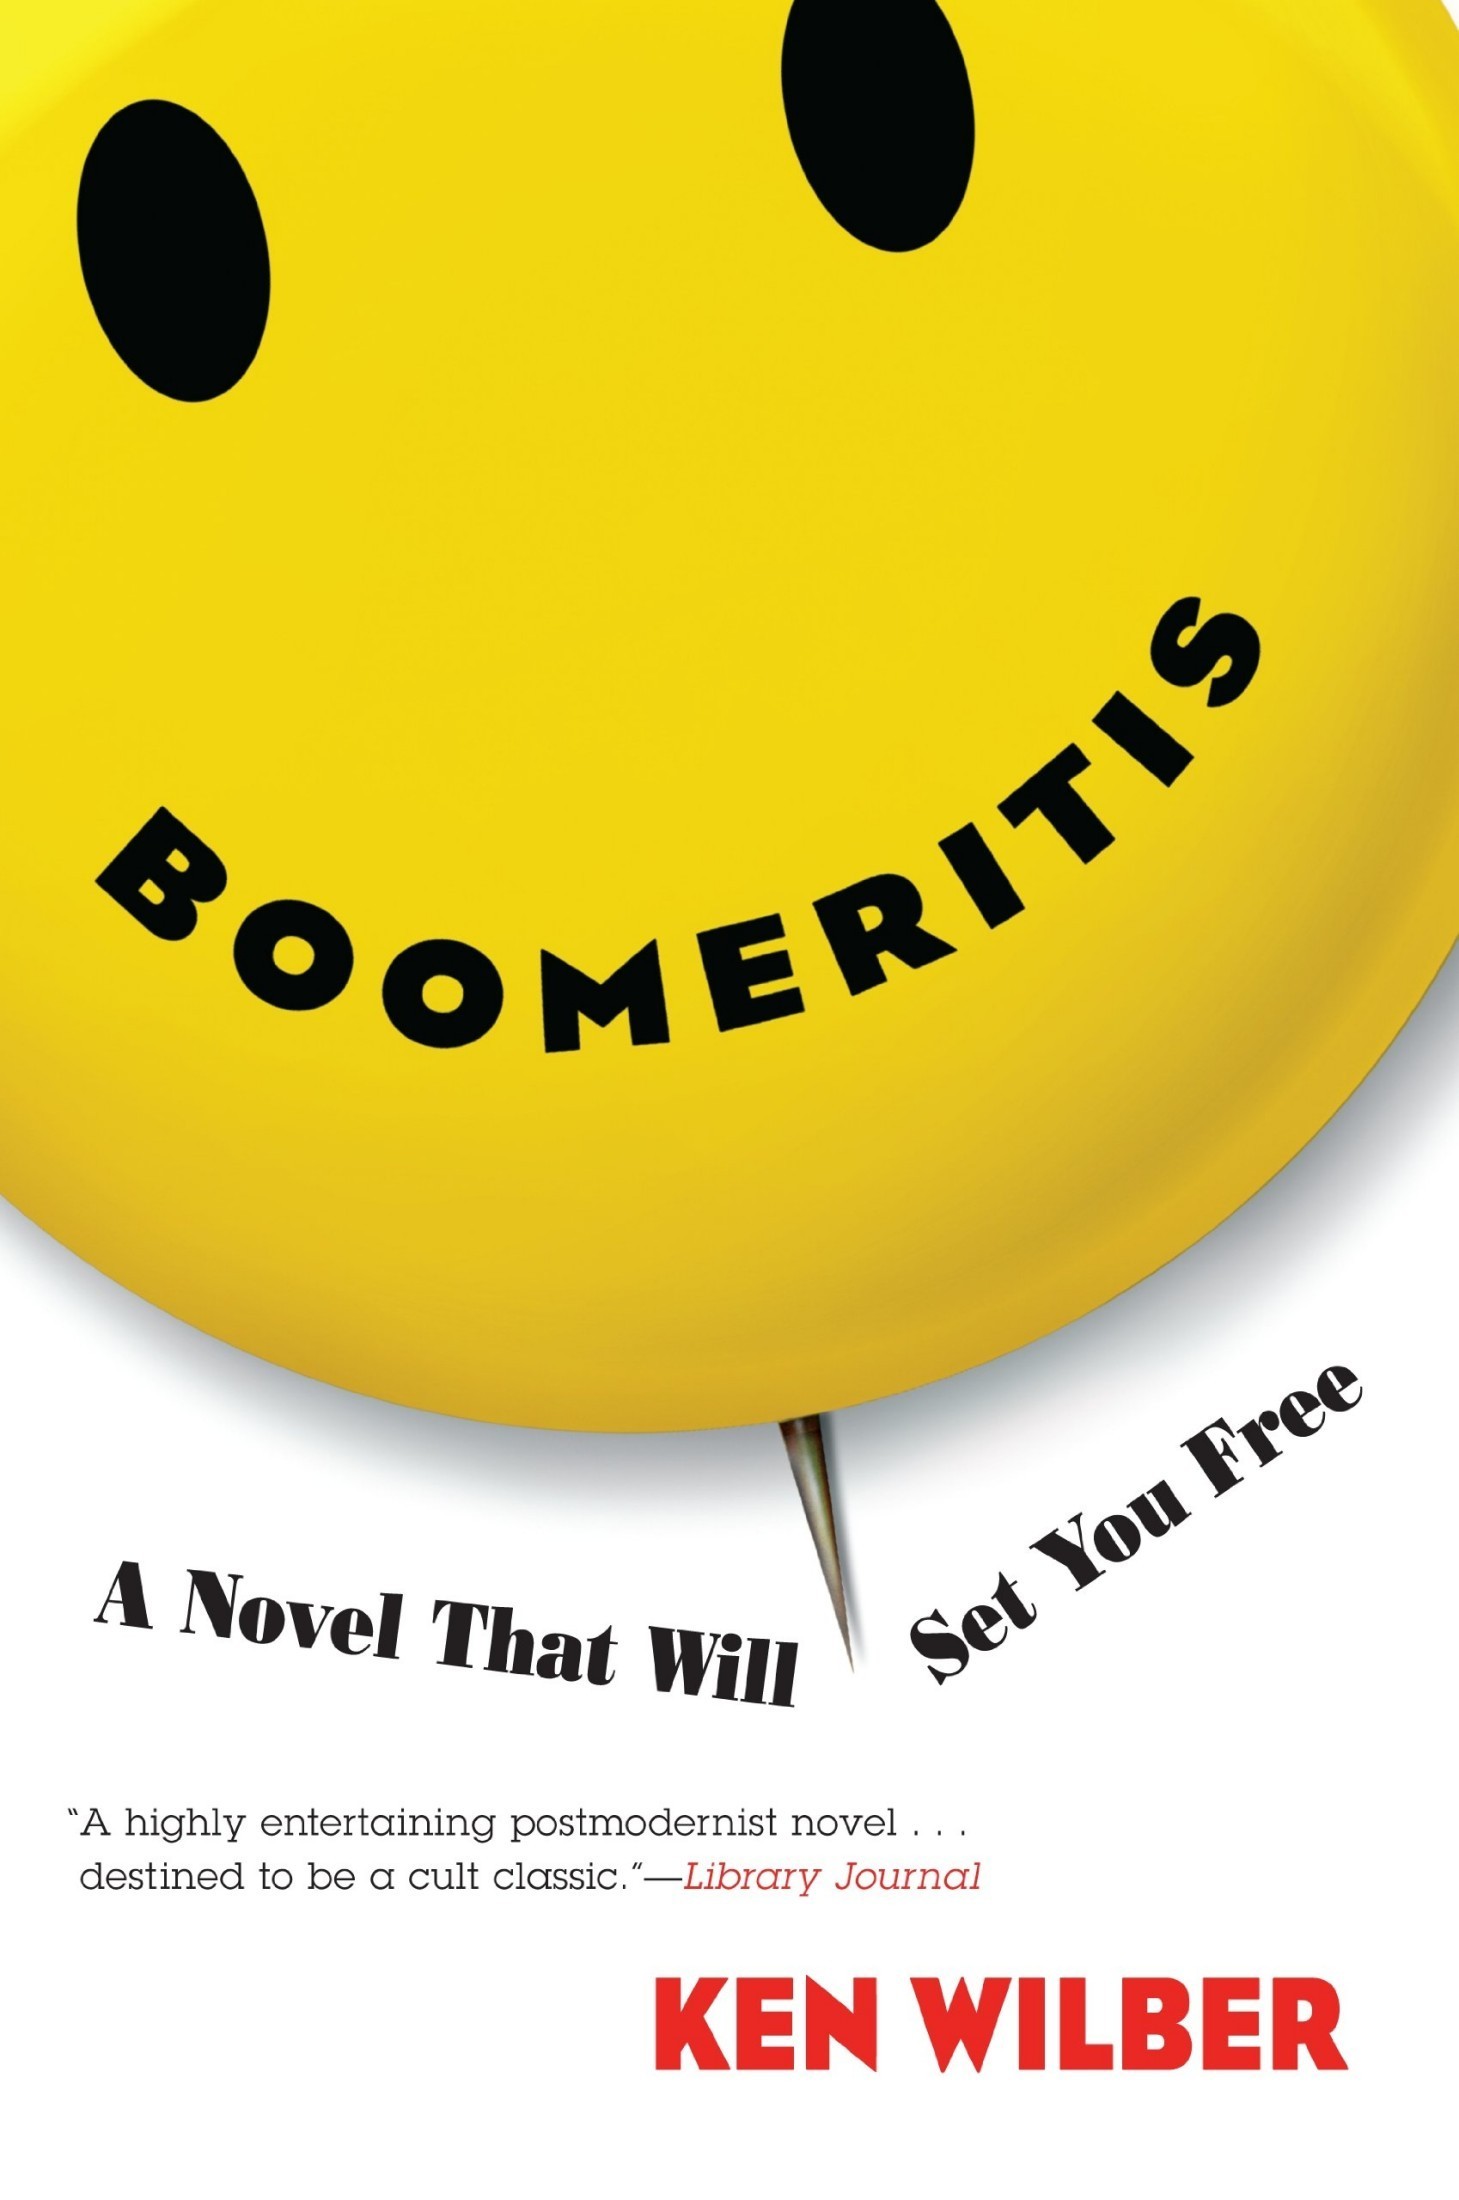 Boomeritis: A Novel That Will Set You Free